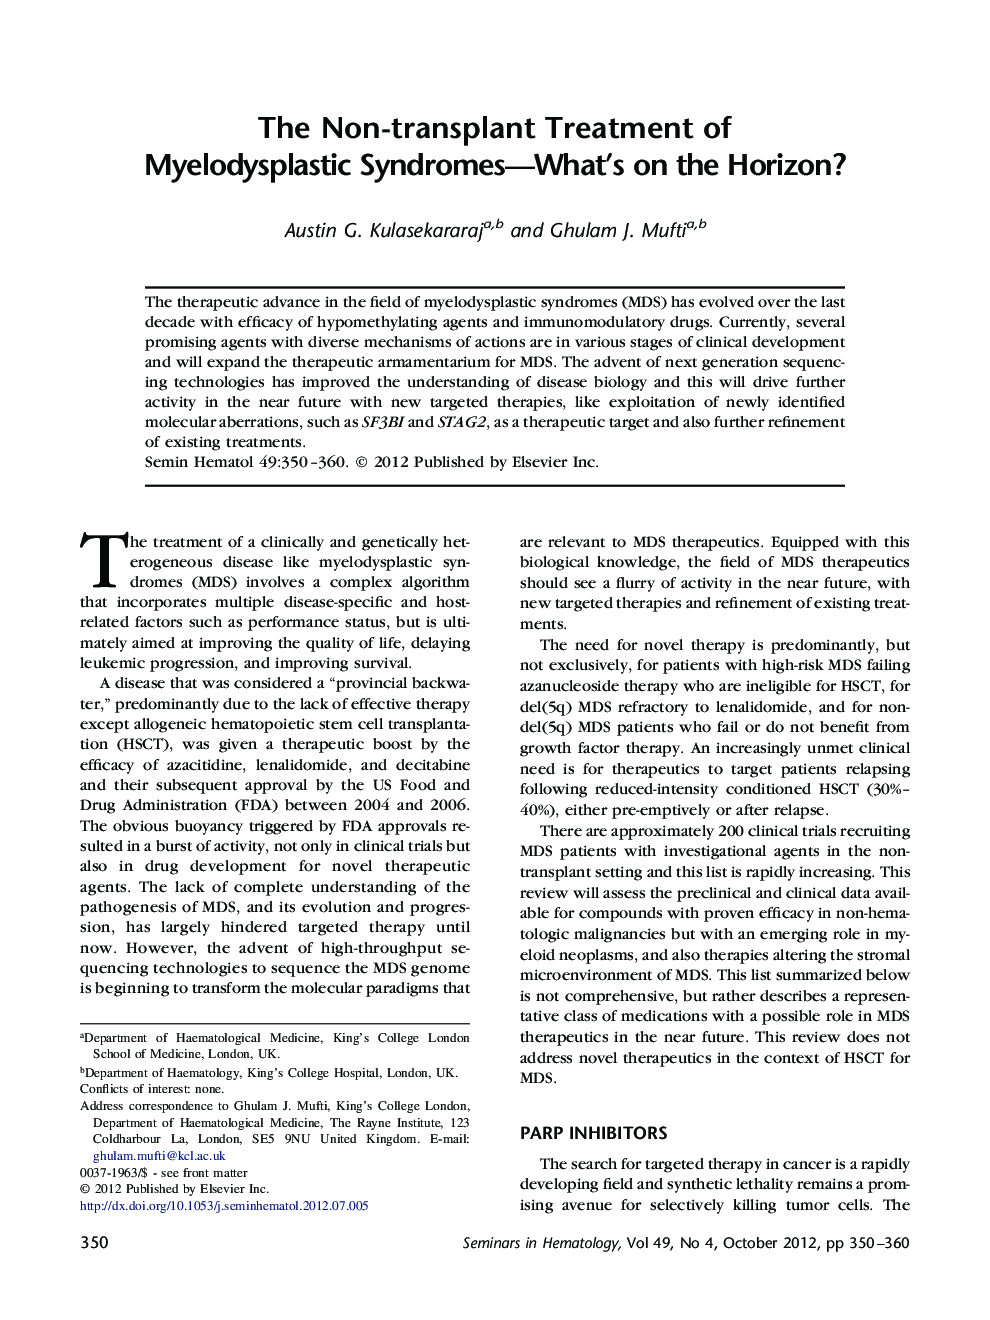 The Non-transplant Treatment of Myelodysplastic Syndromes-What's on the Horizon?